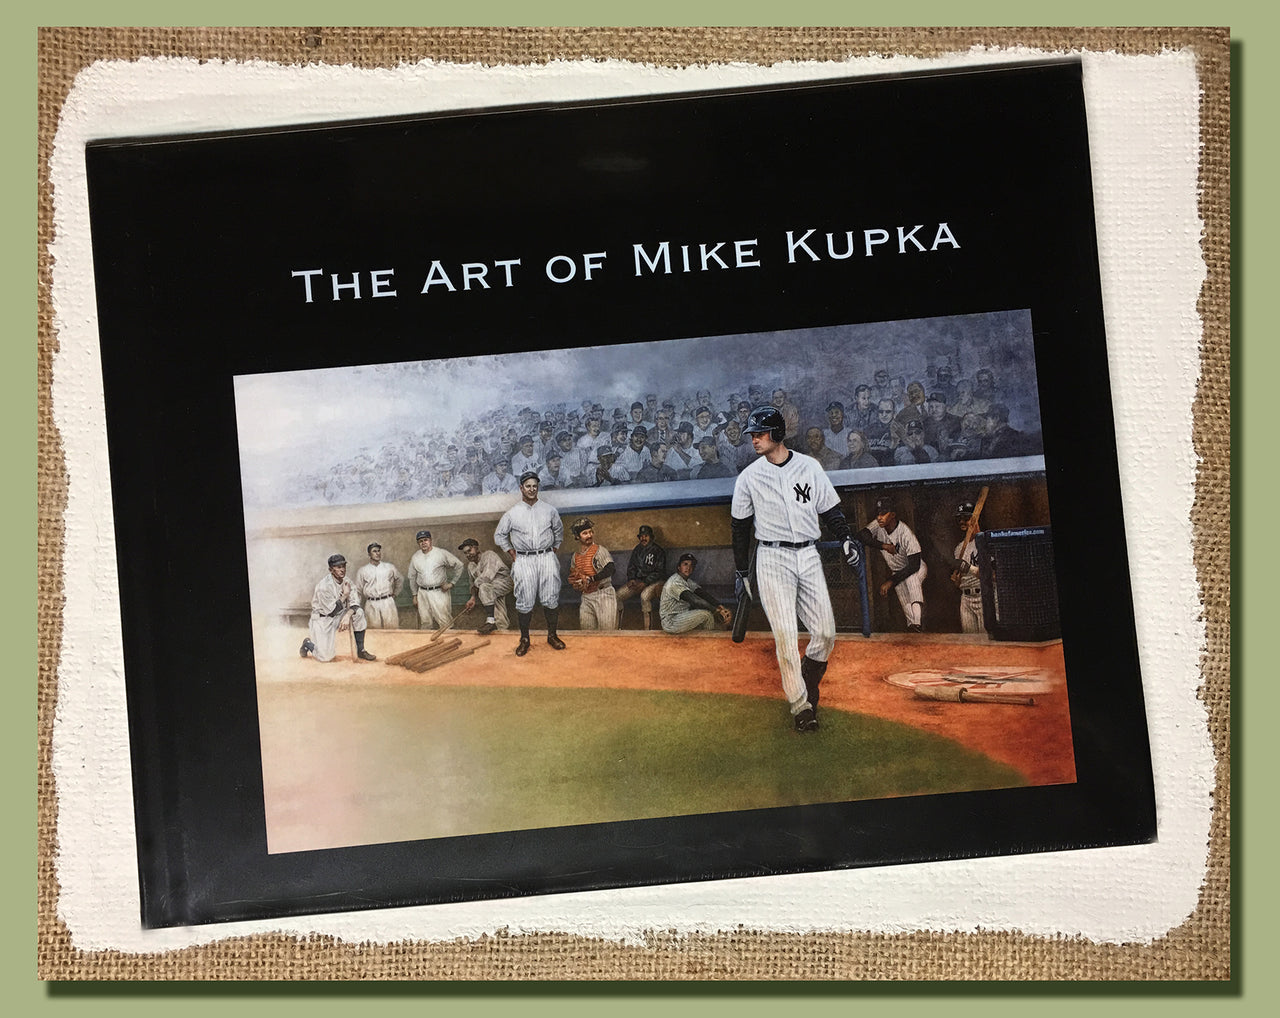 "The Art of Mike Kupka" book